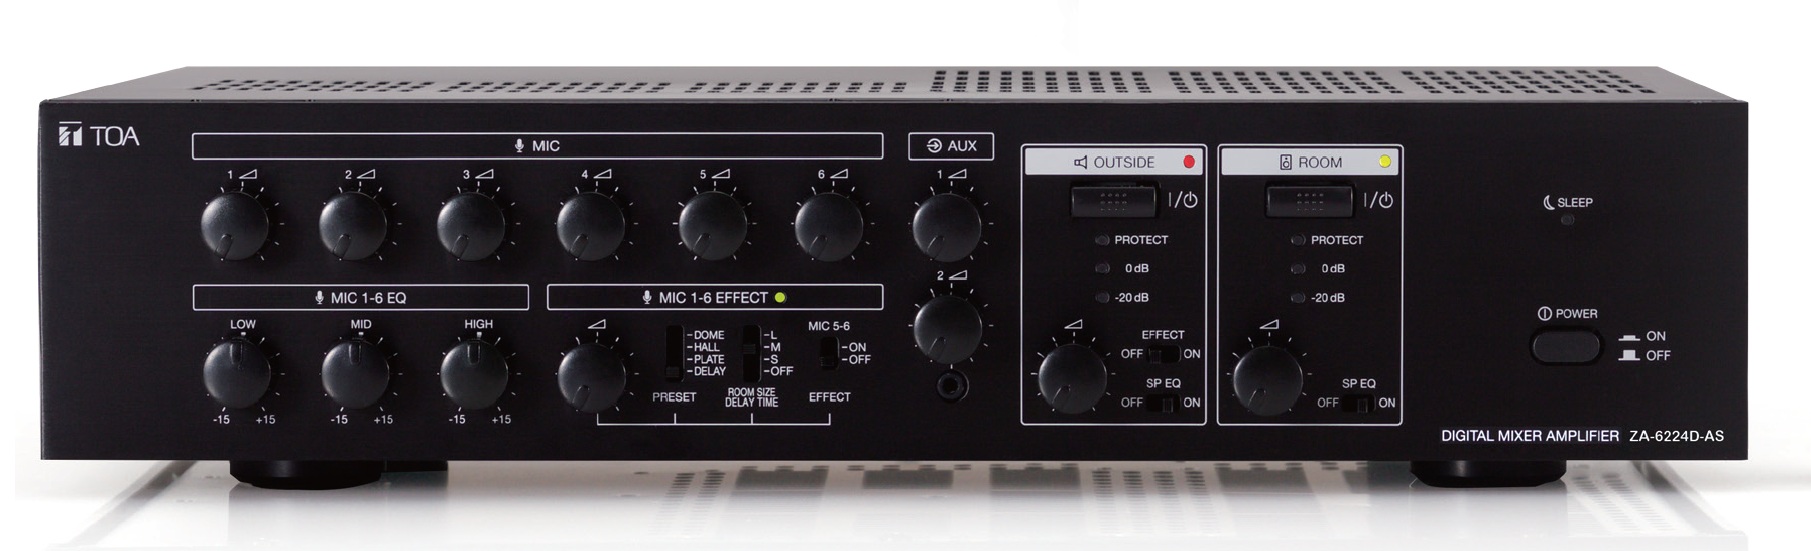 ZA-6224D-AS Digital Mixer Amplifier